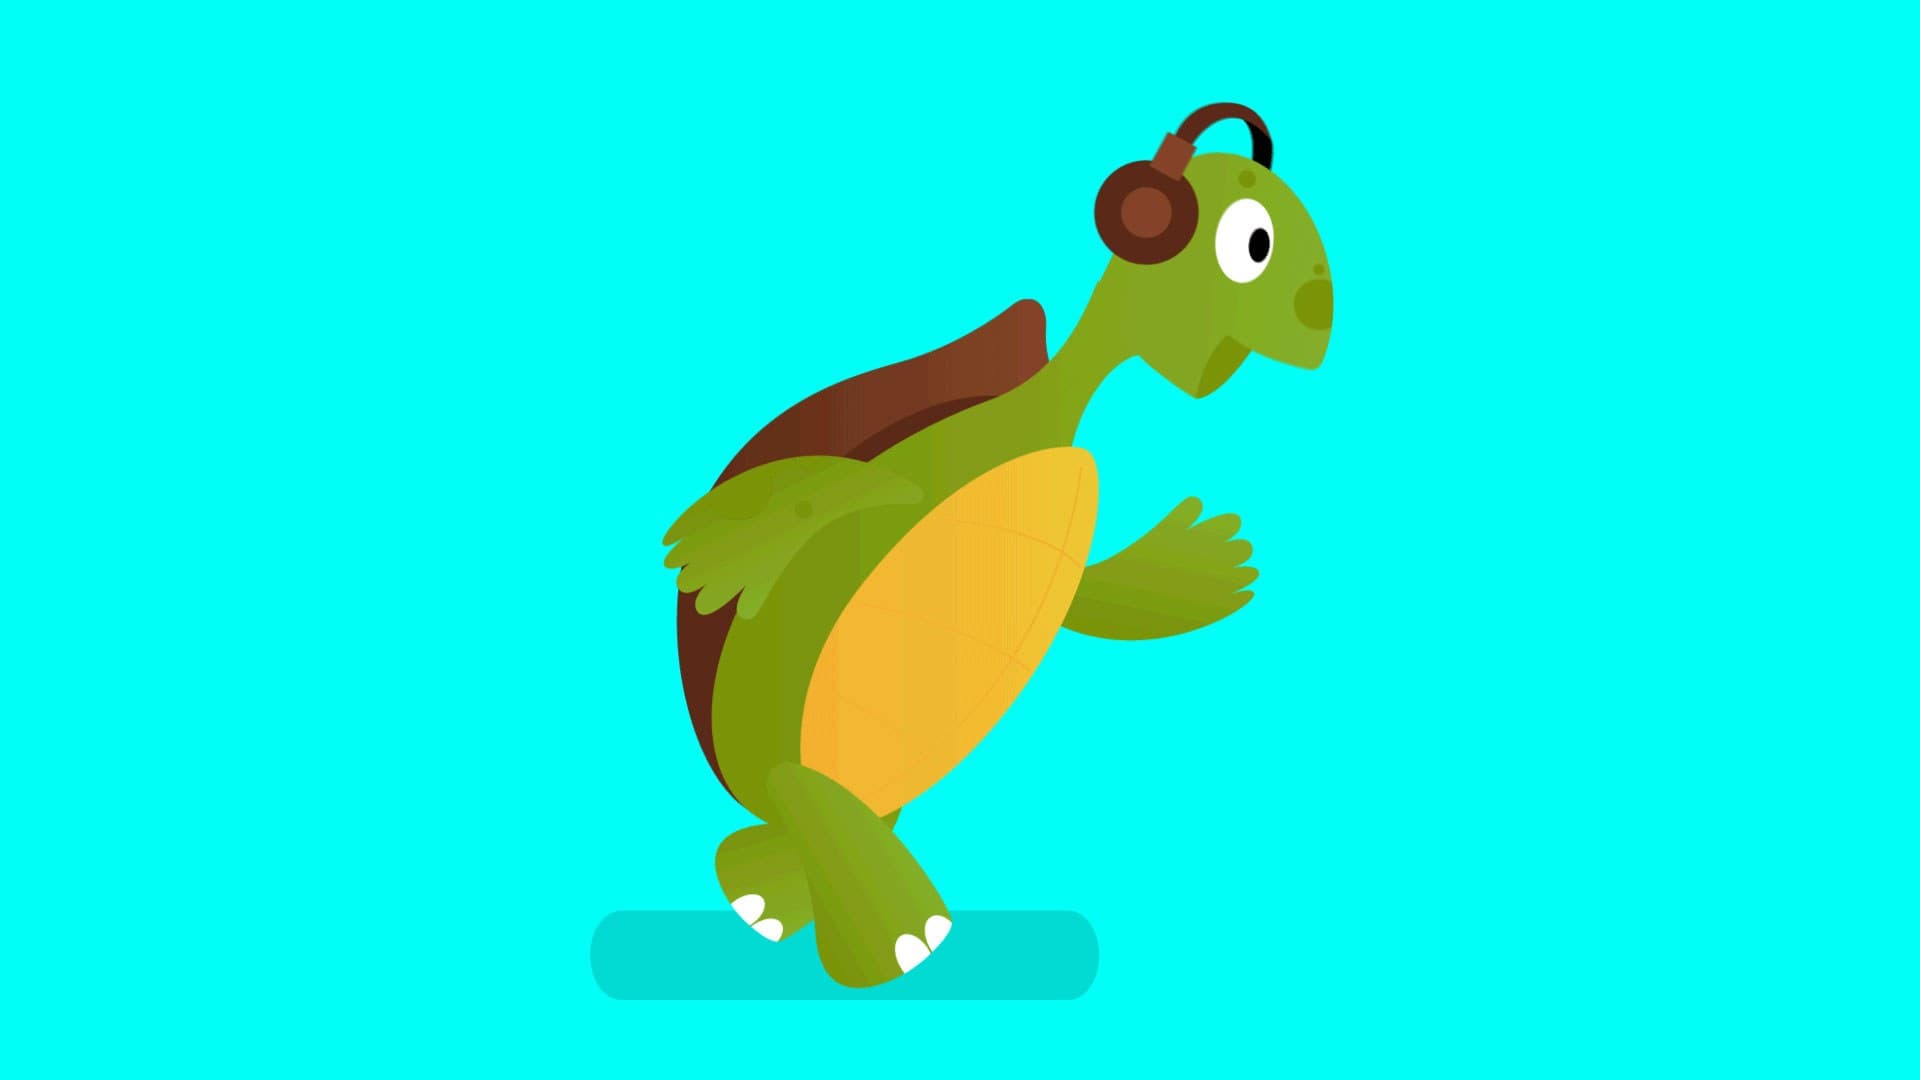 Turtle walking with headphones